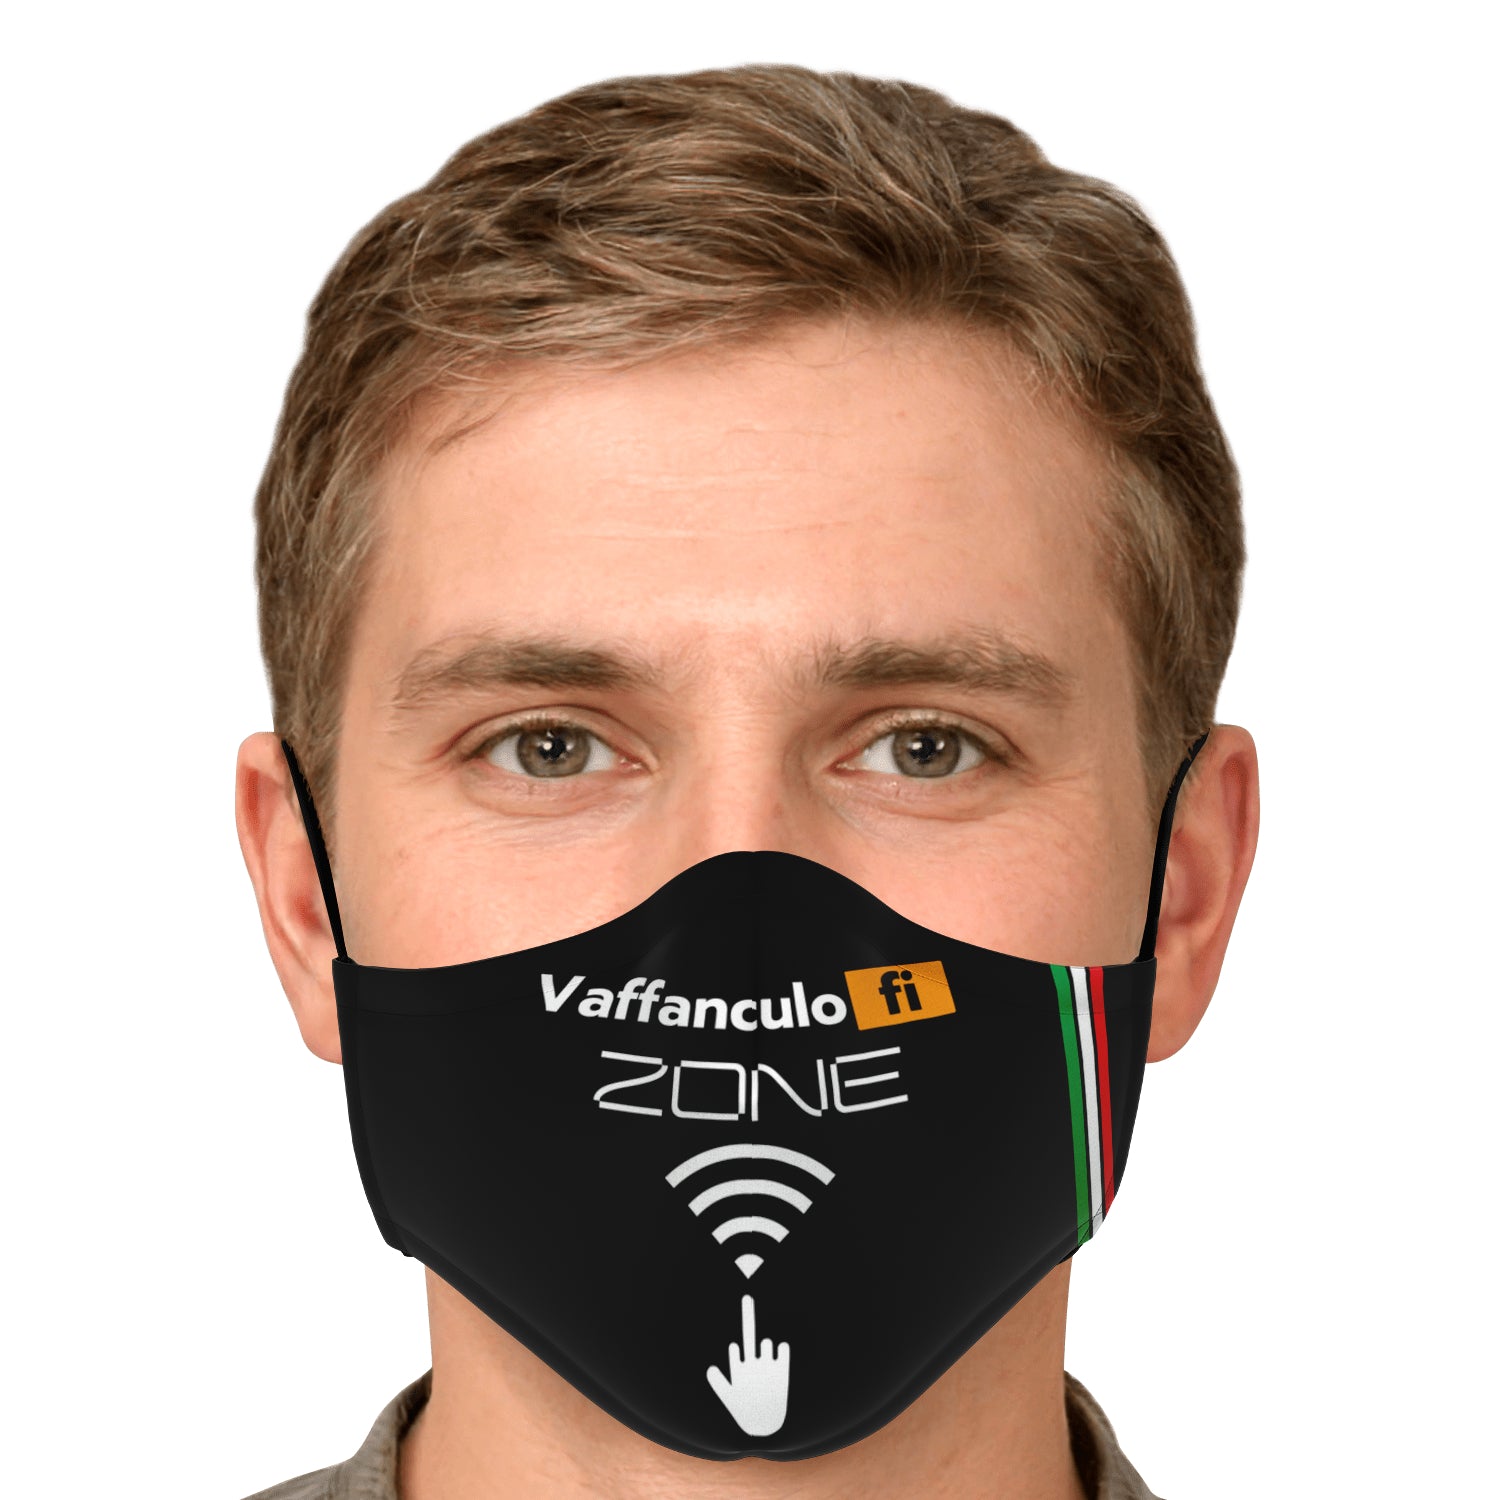 Vaffanculo-Fi Zone Face Mask + 2 PM 2.5 Filters